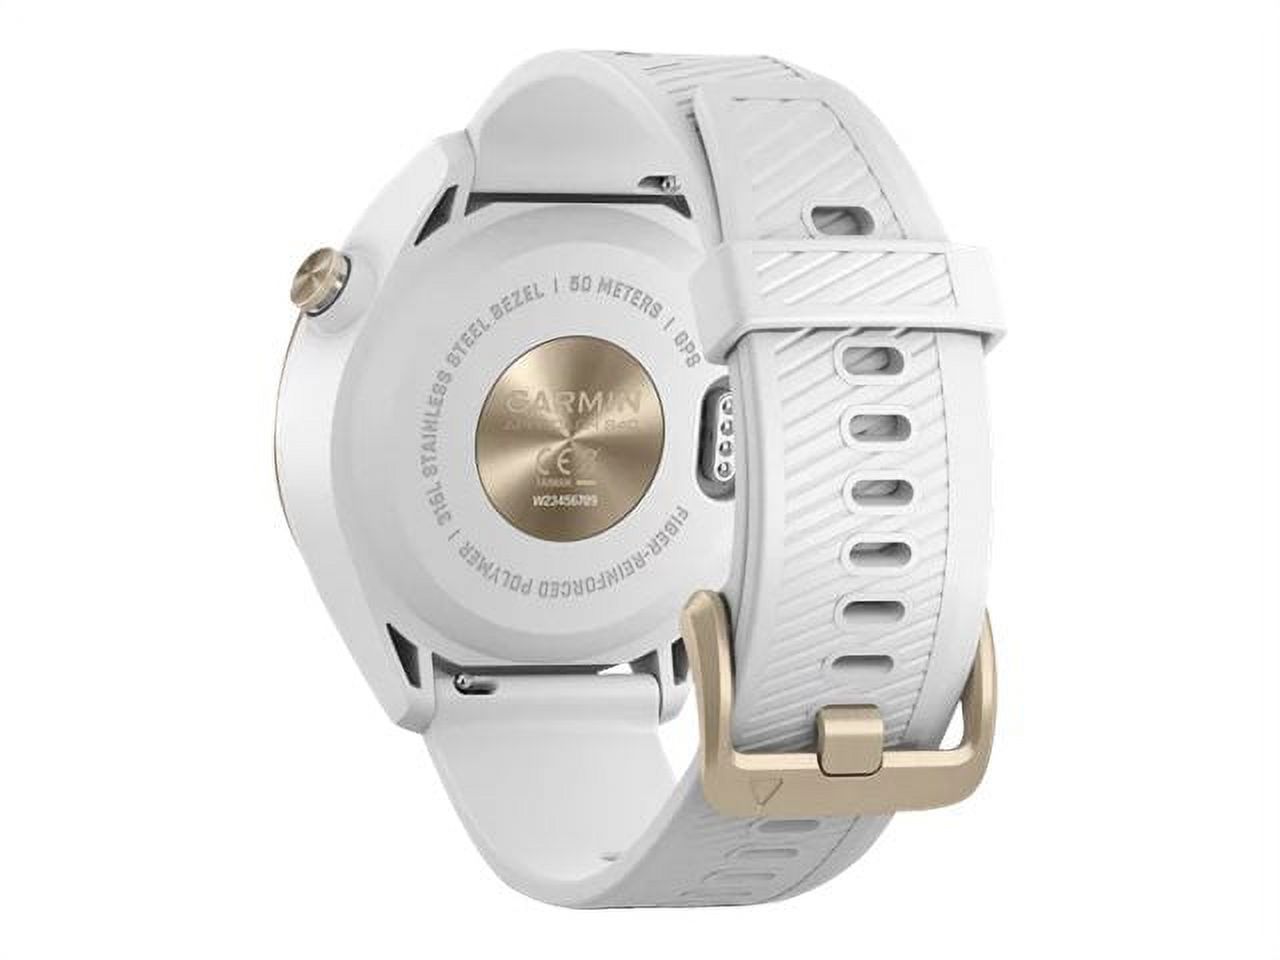 Garmin Approach S40 GPS Golf Smartwatch in White - image 4 of 7